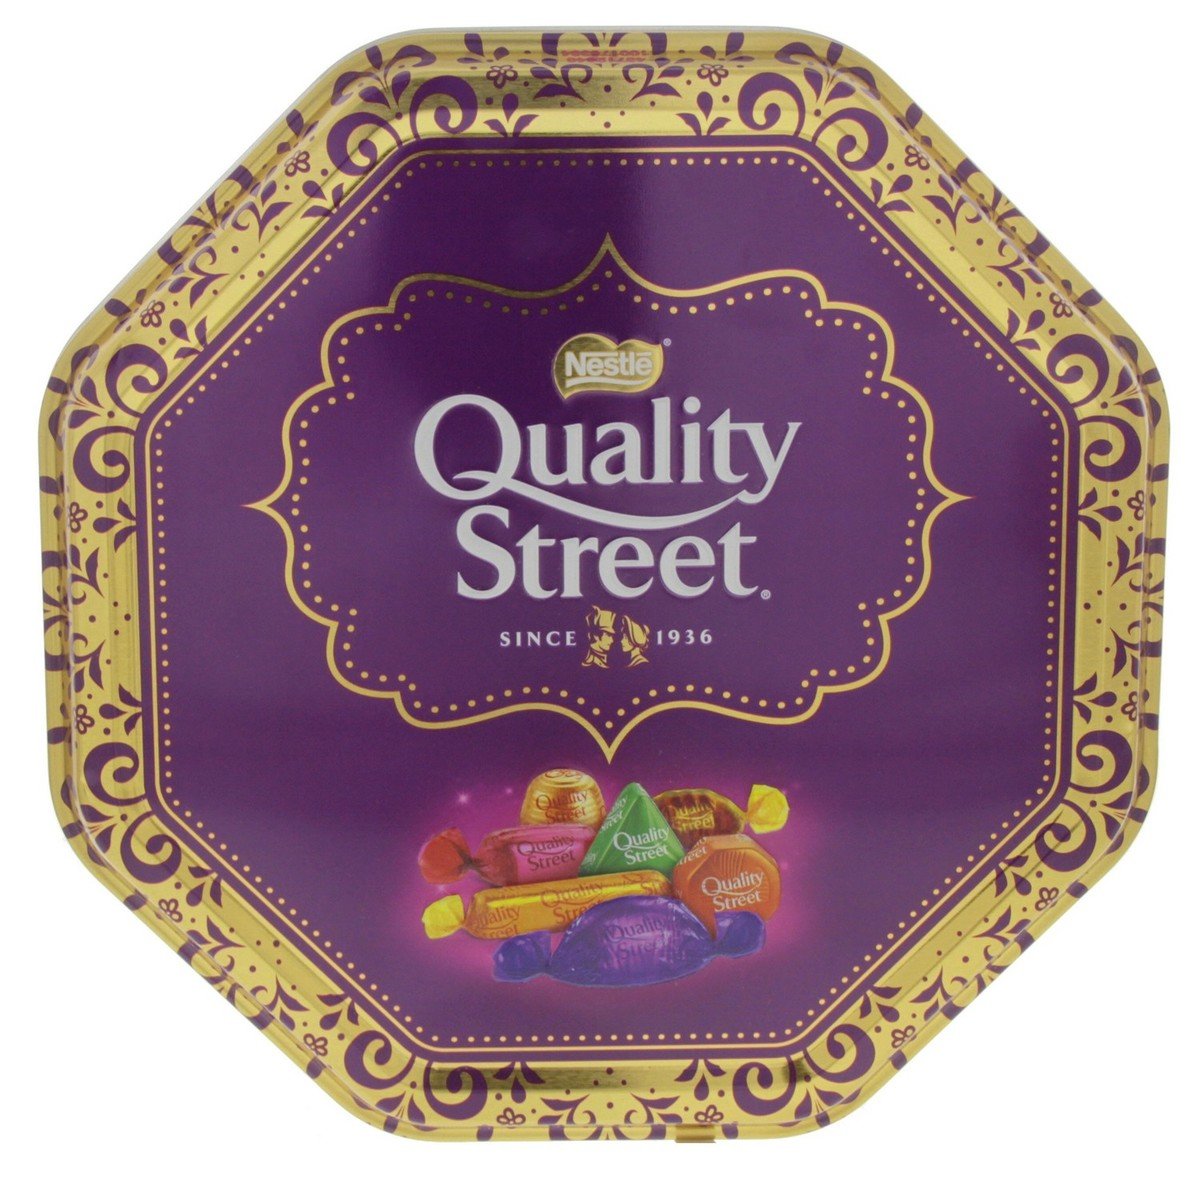 Nestle Quality Street Chocolates 1.2 kg